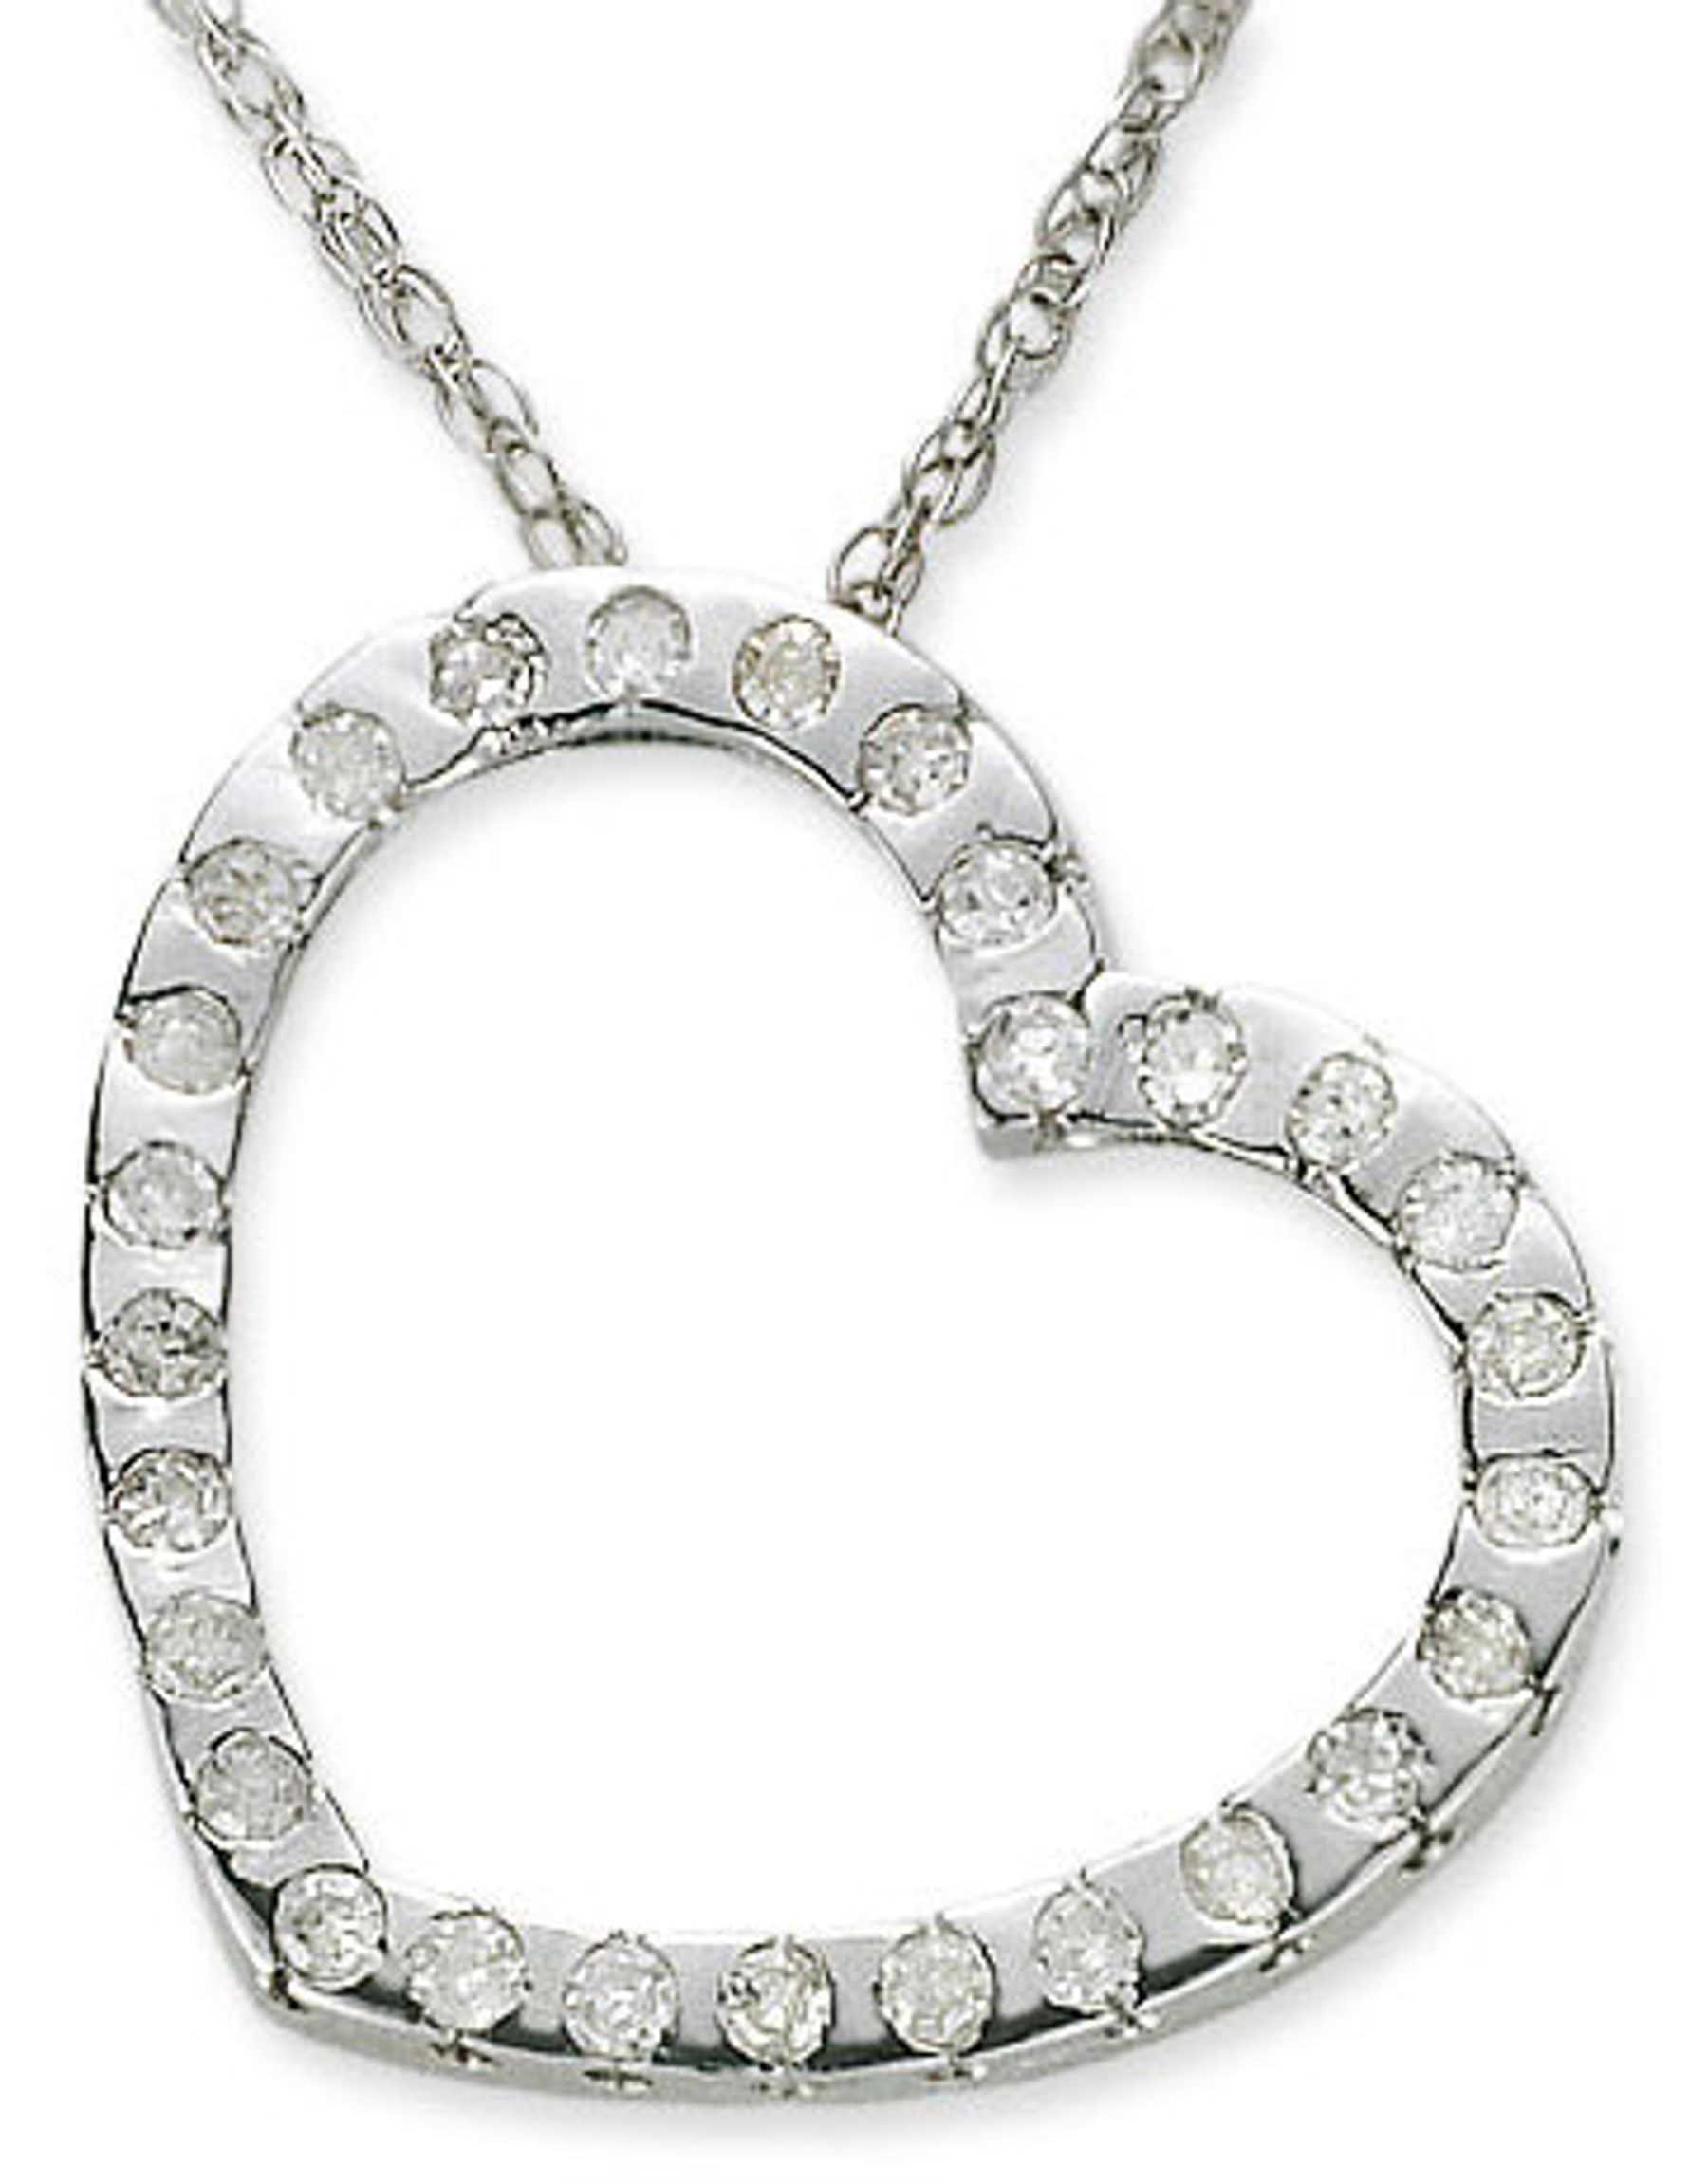 Platinum diamond heart pendant with platinum chain